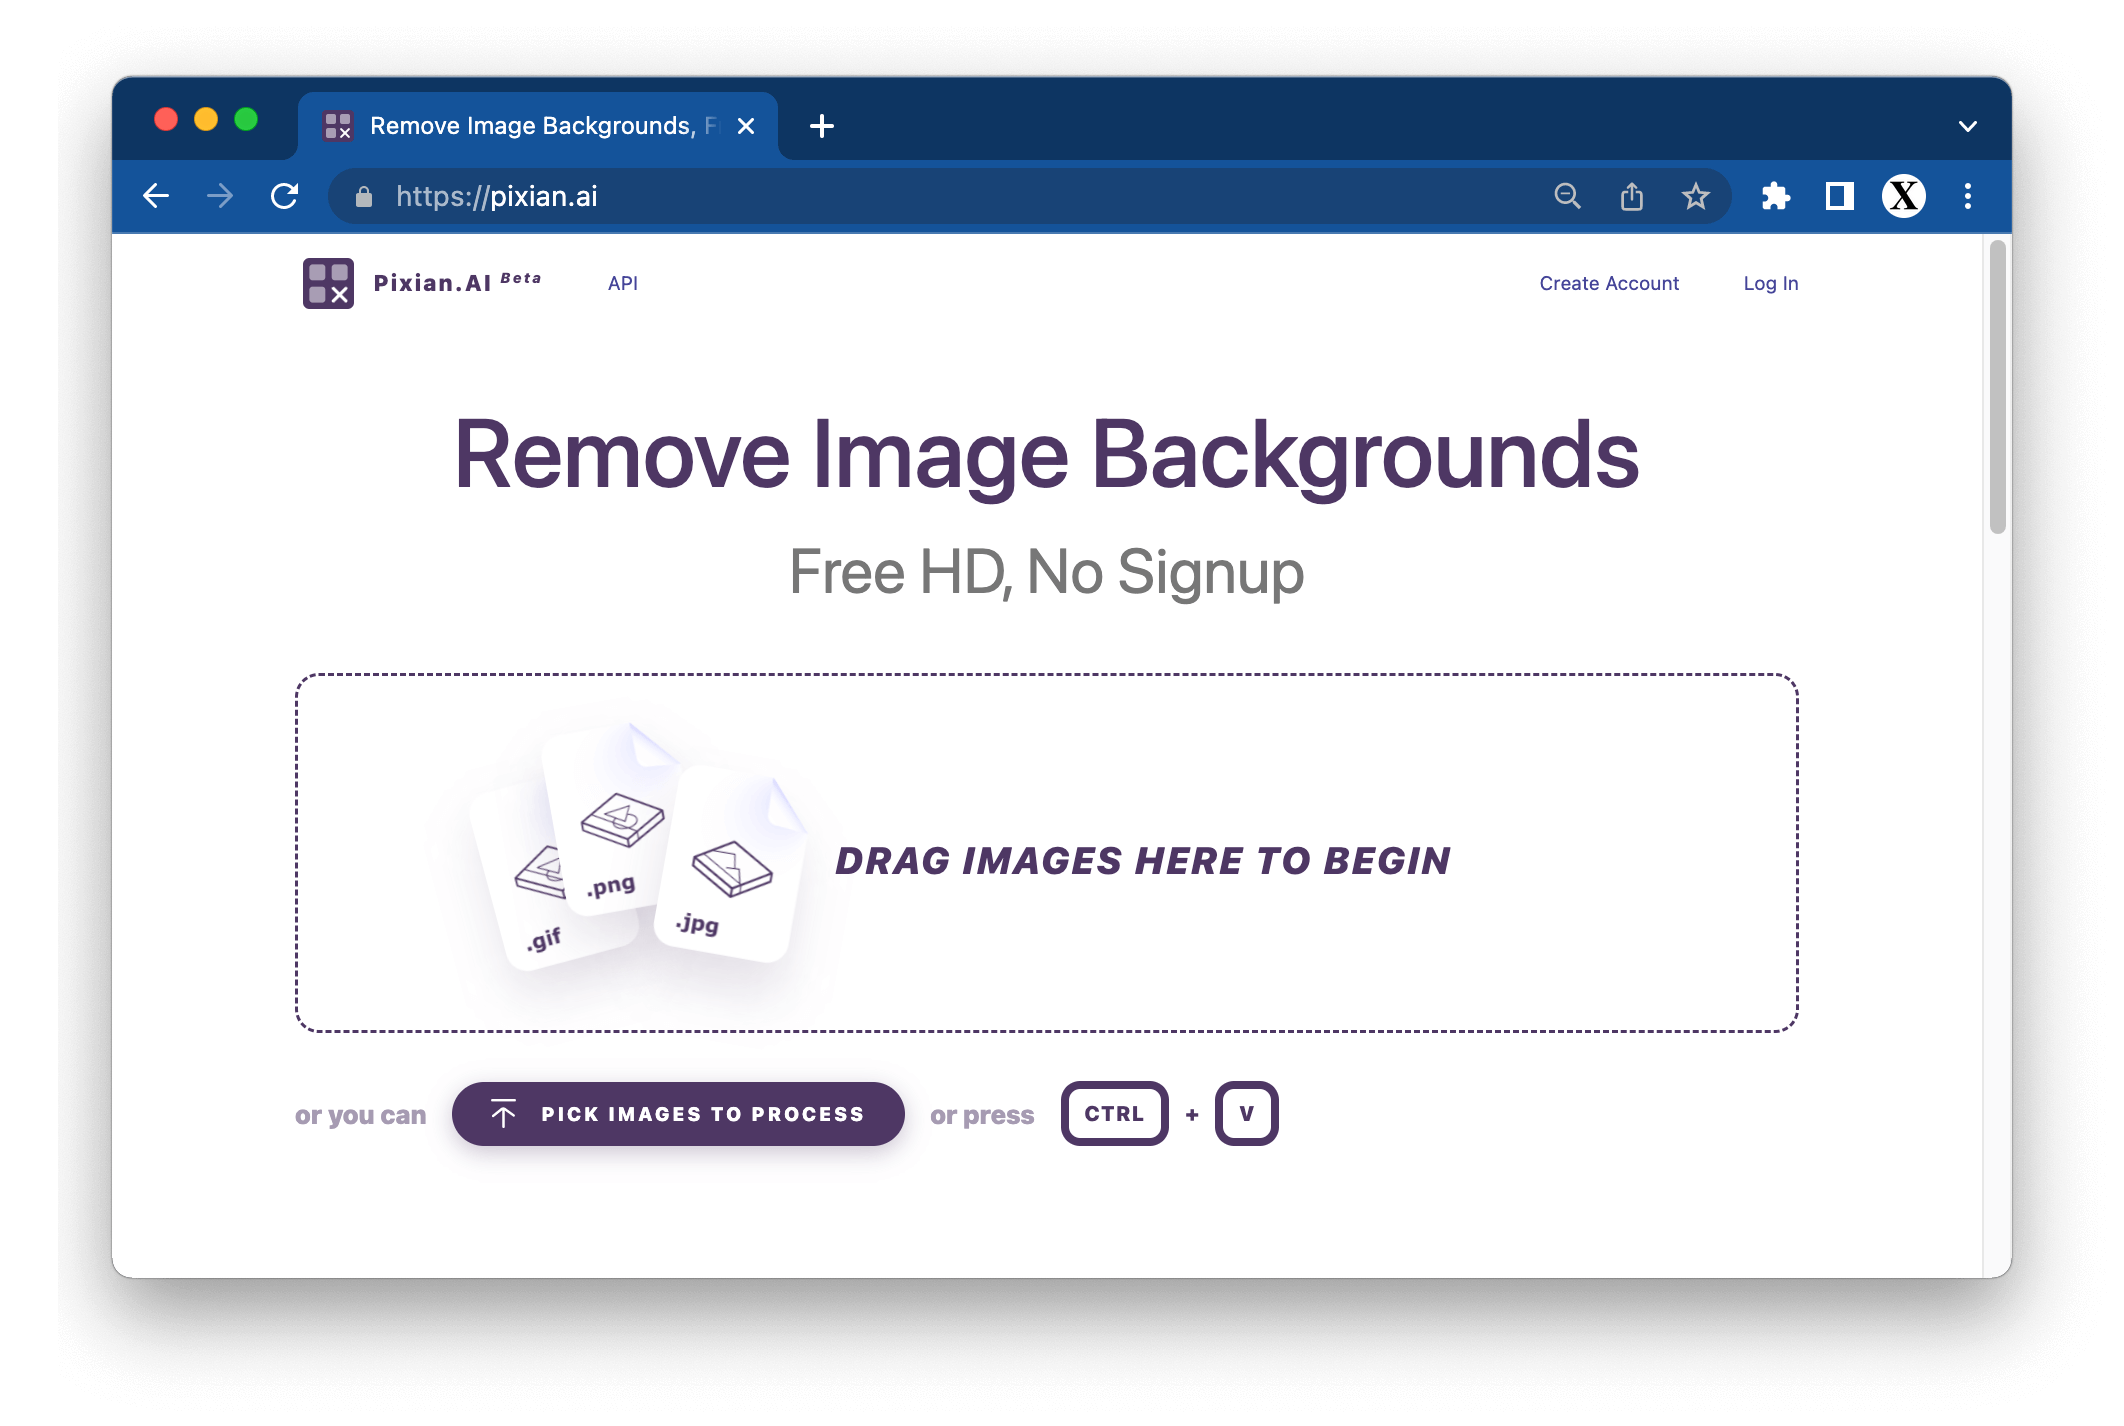 Remove Image Backgrounds, Free HD, No Signup - Pixian.AI